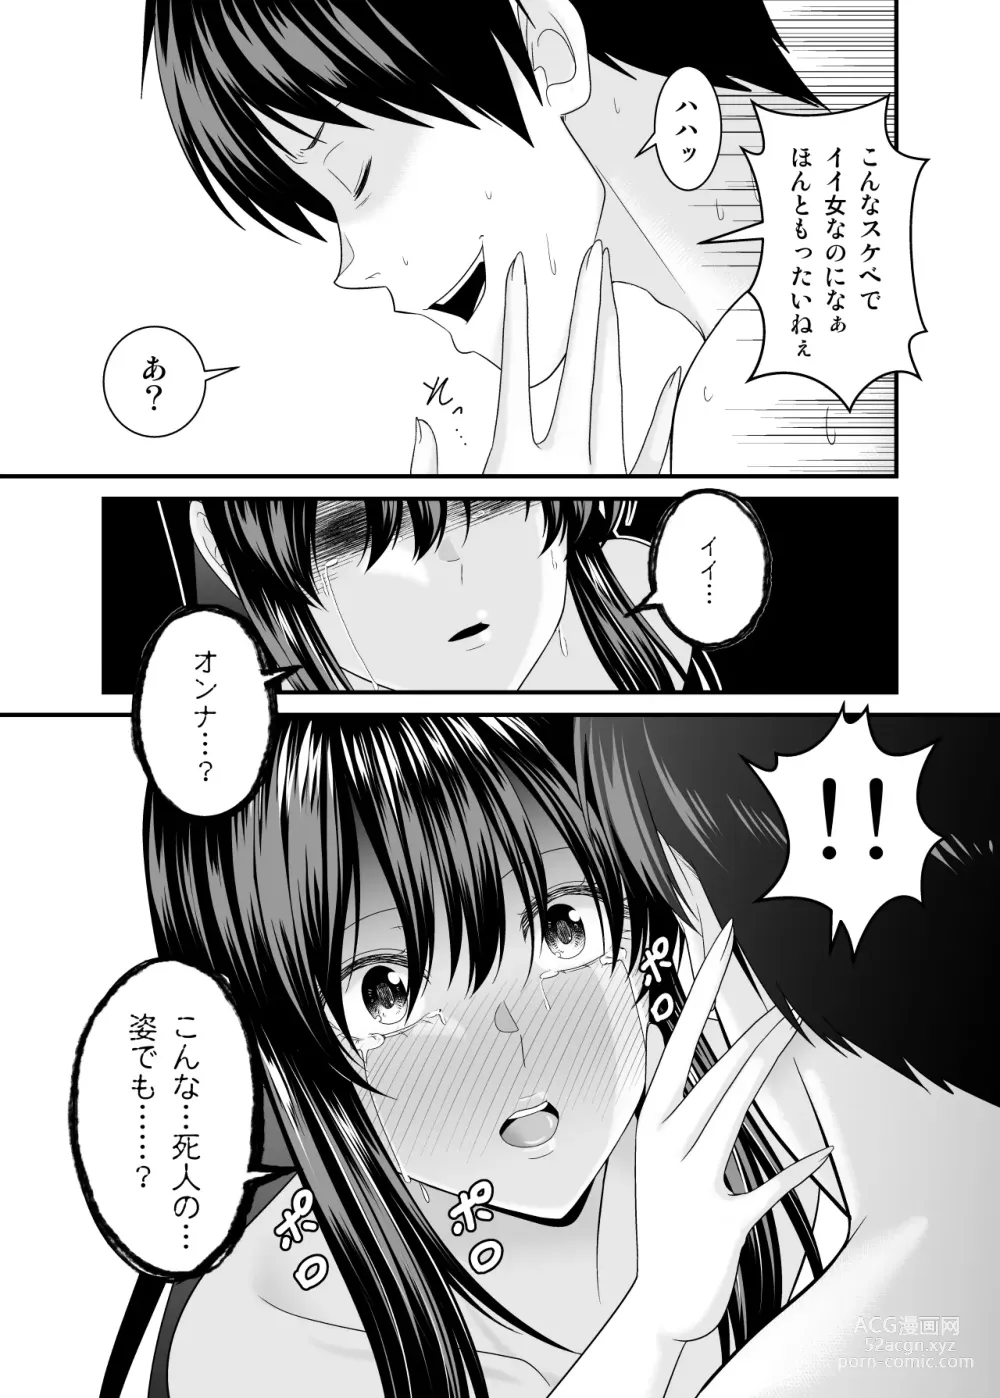 Page 34 of doujinshi ヤバい事故物件に女幽霊が出たけど無職底辺の俺はセックスしまくる